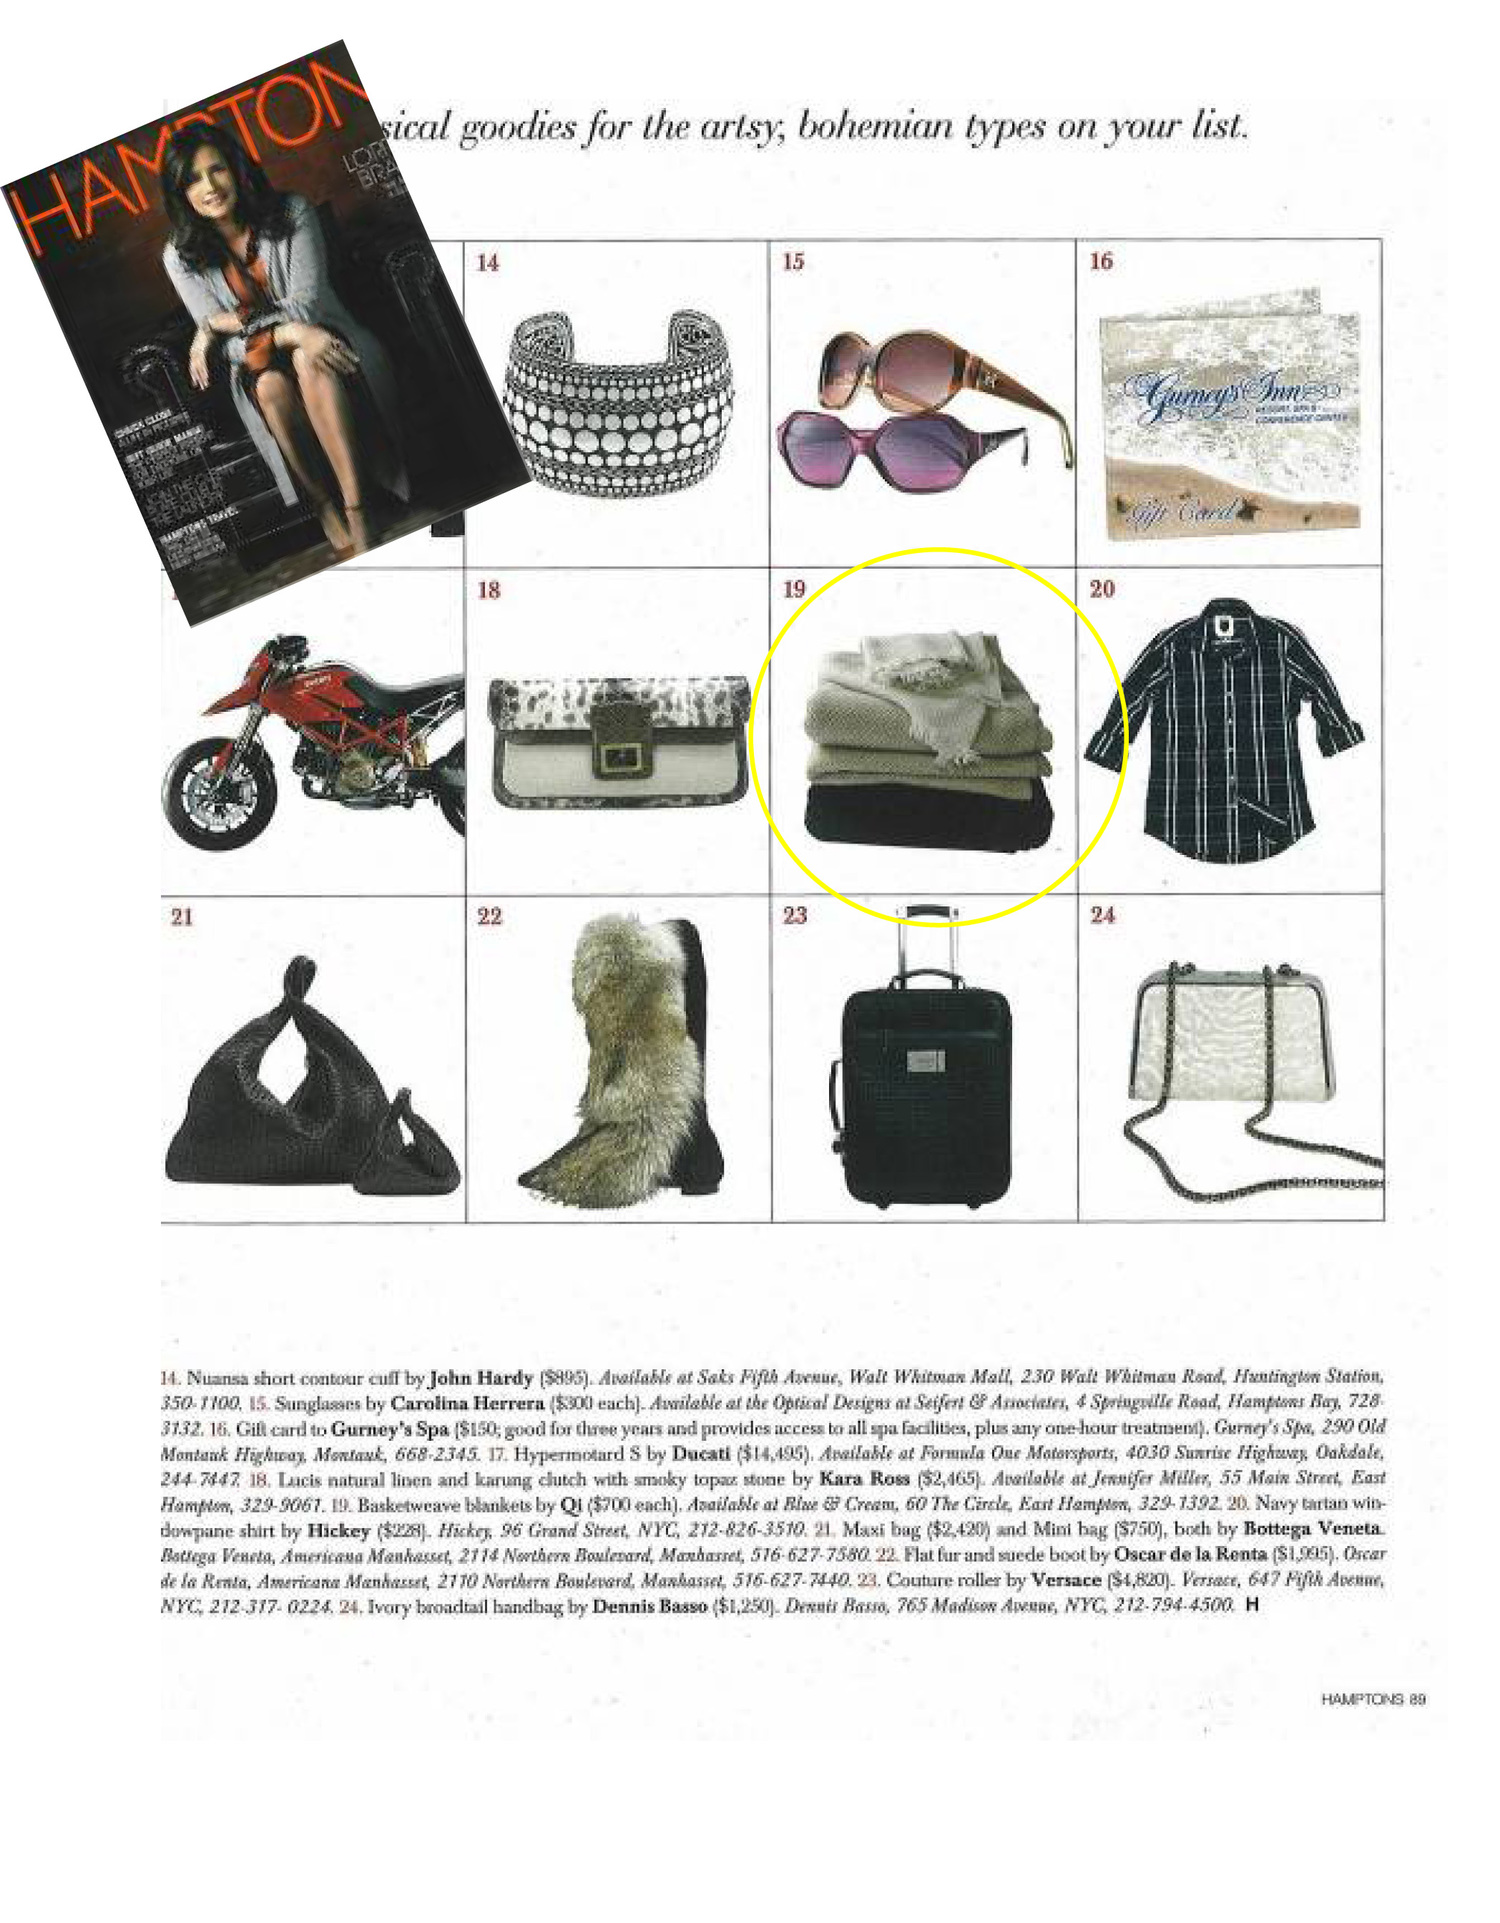 7.Qi Cashmere Blankets in Hamptons Magazine.jpg